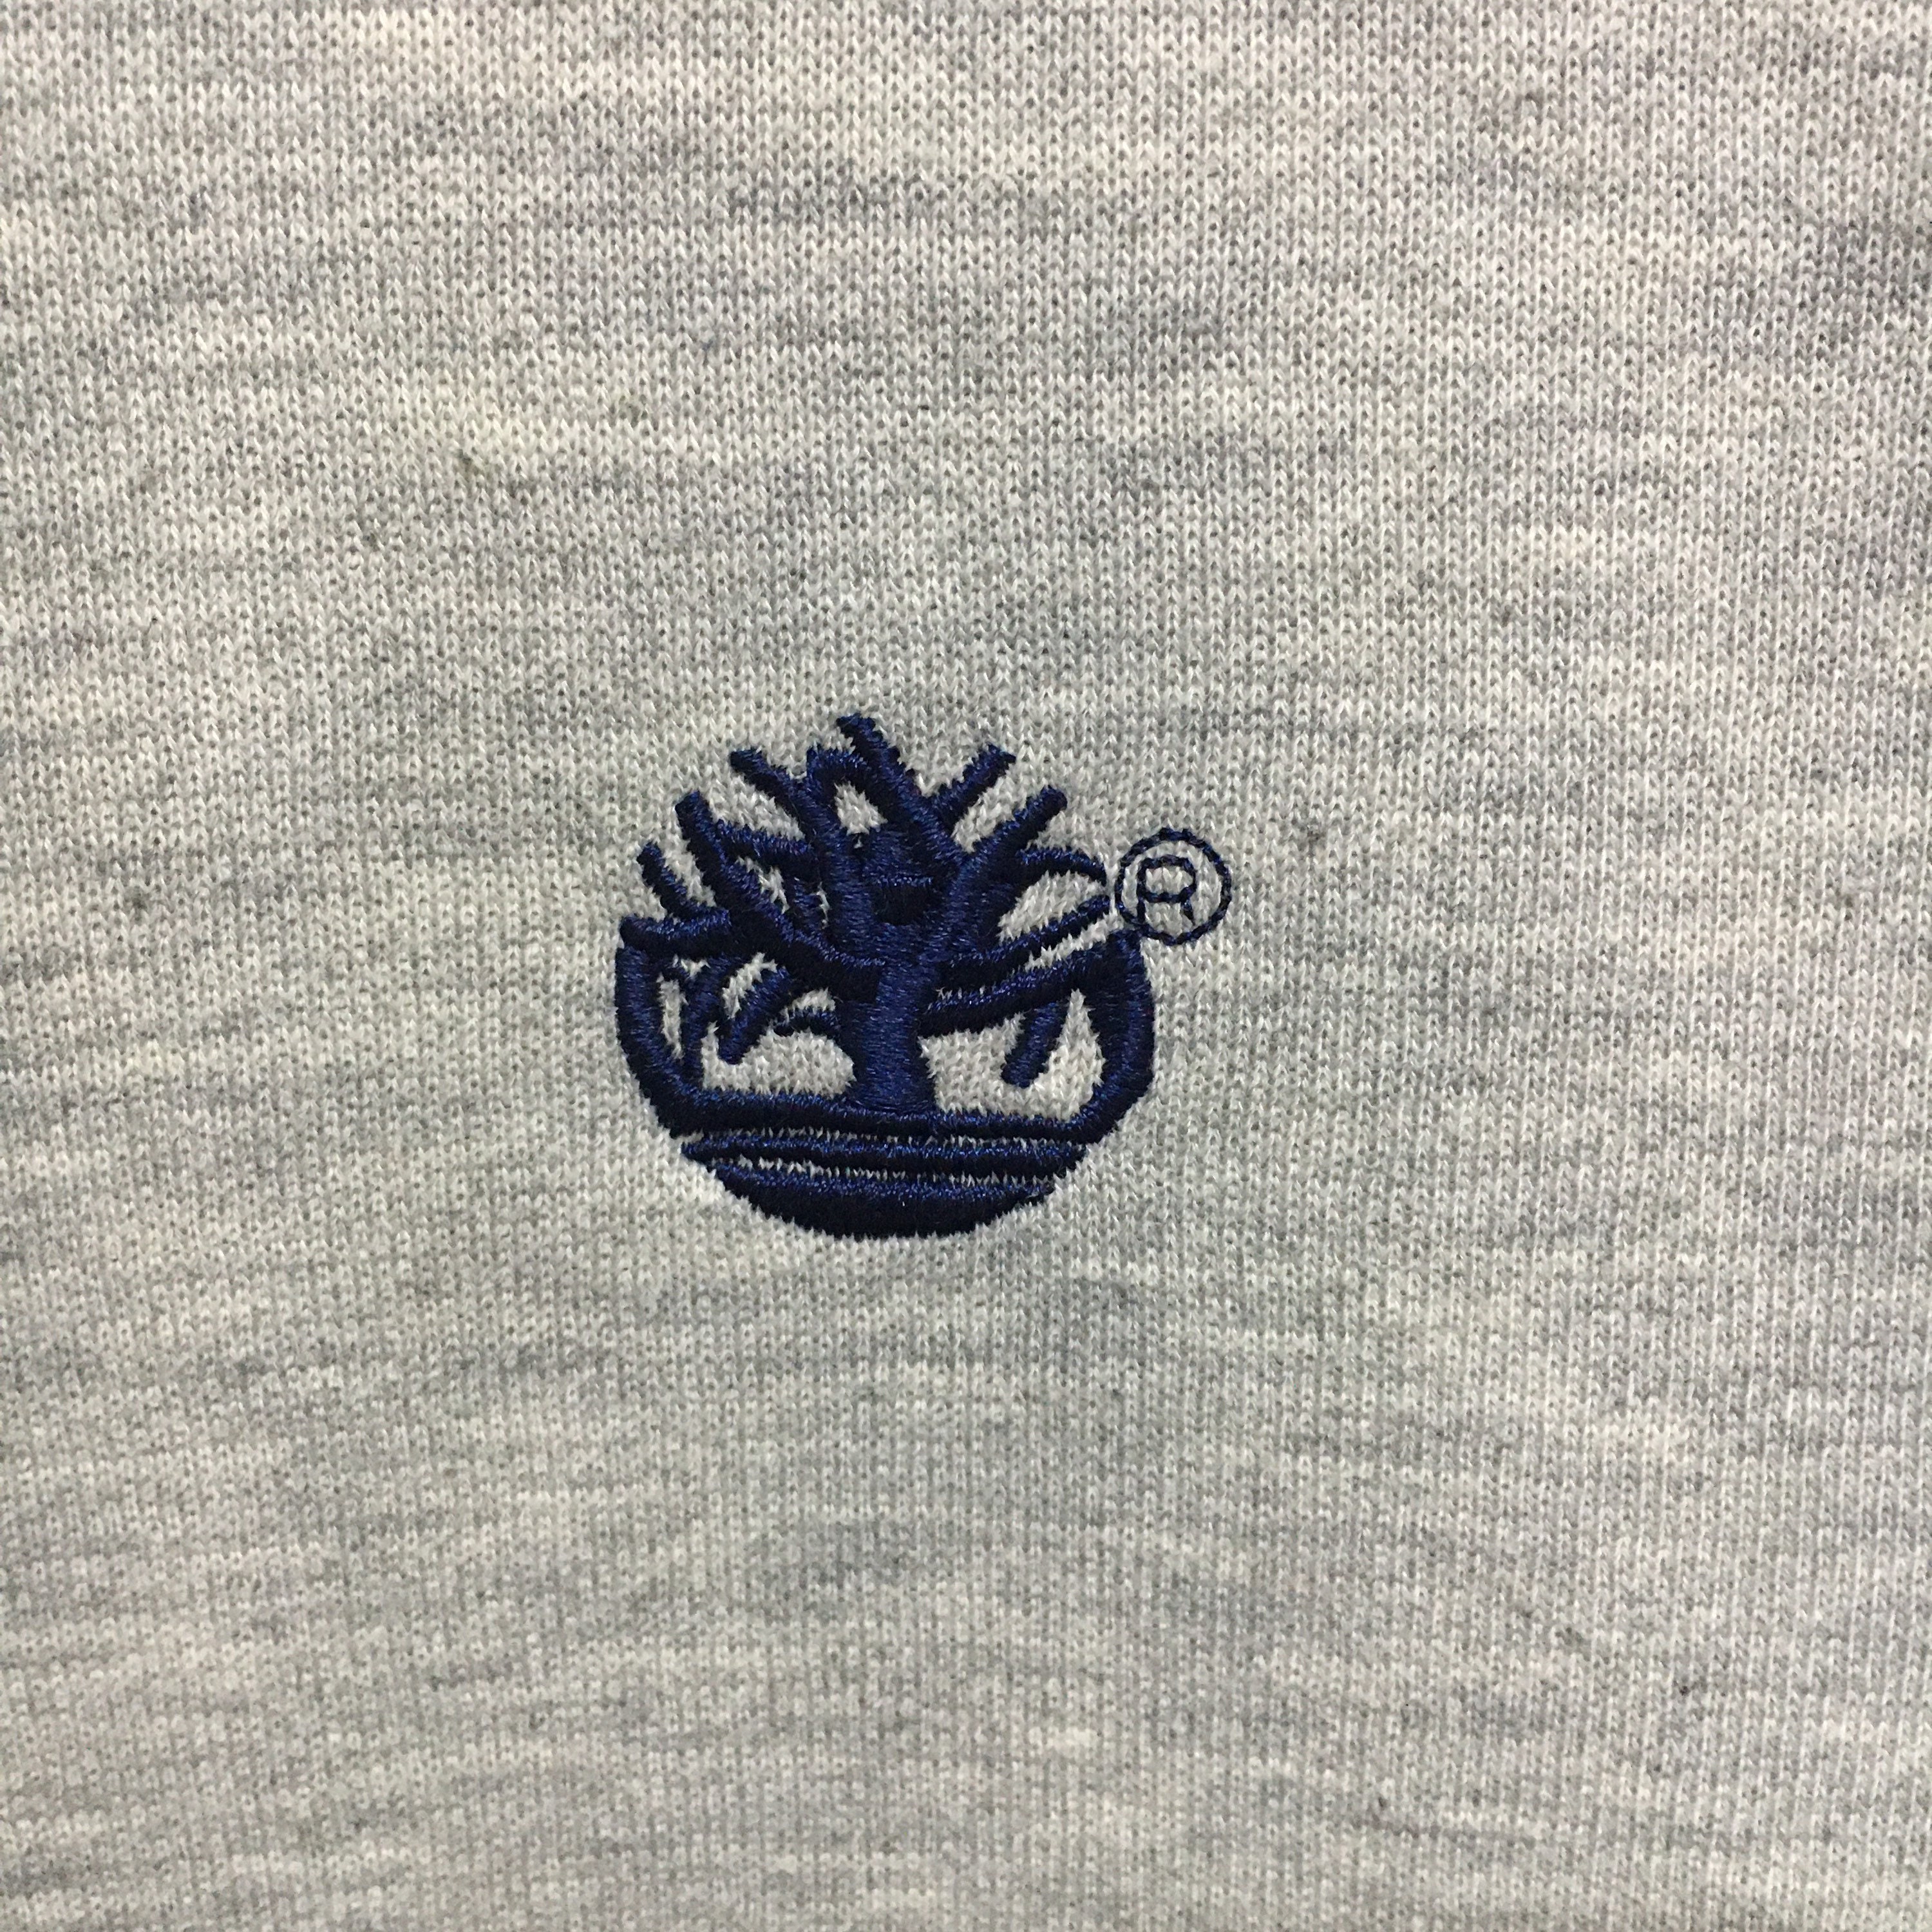 Rare Timberland Established 1973 sweatshirt big logo | Etsy